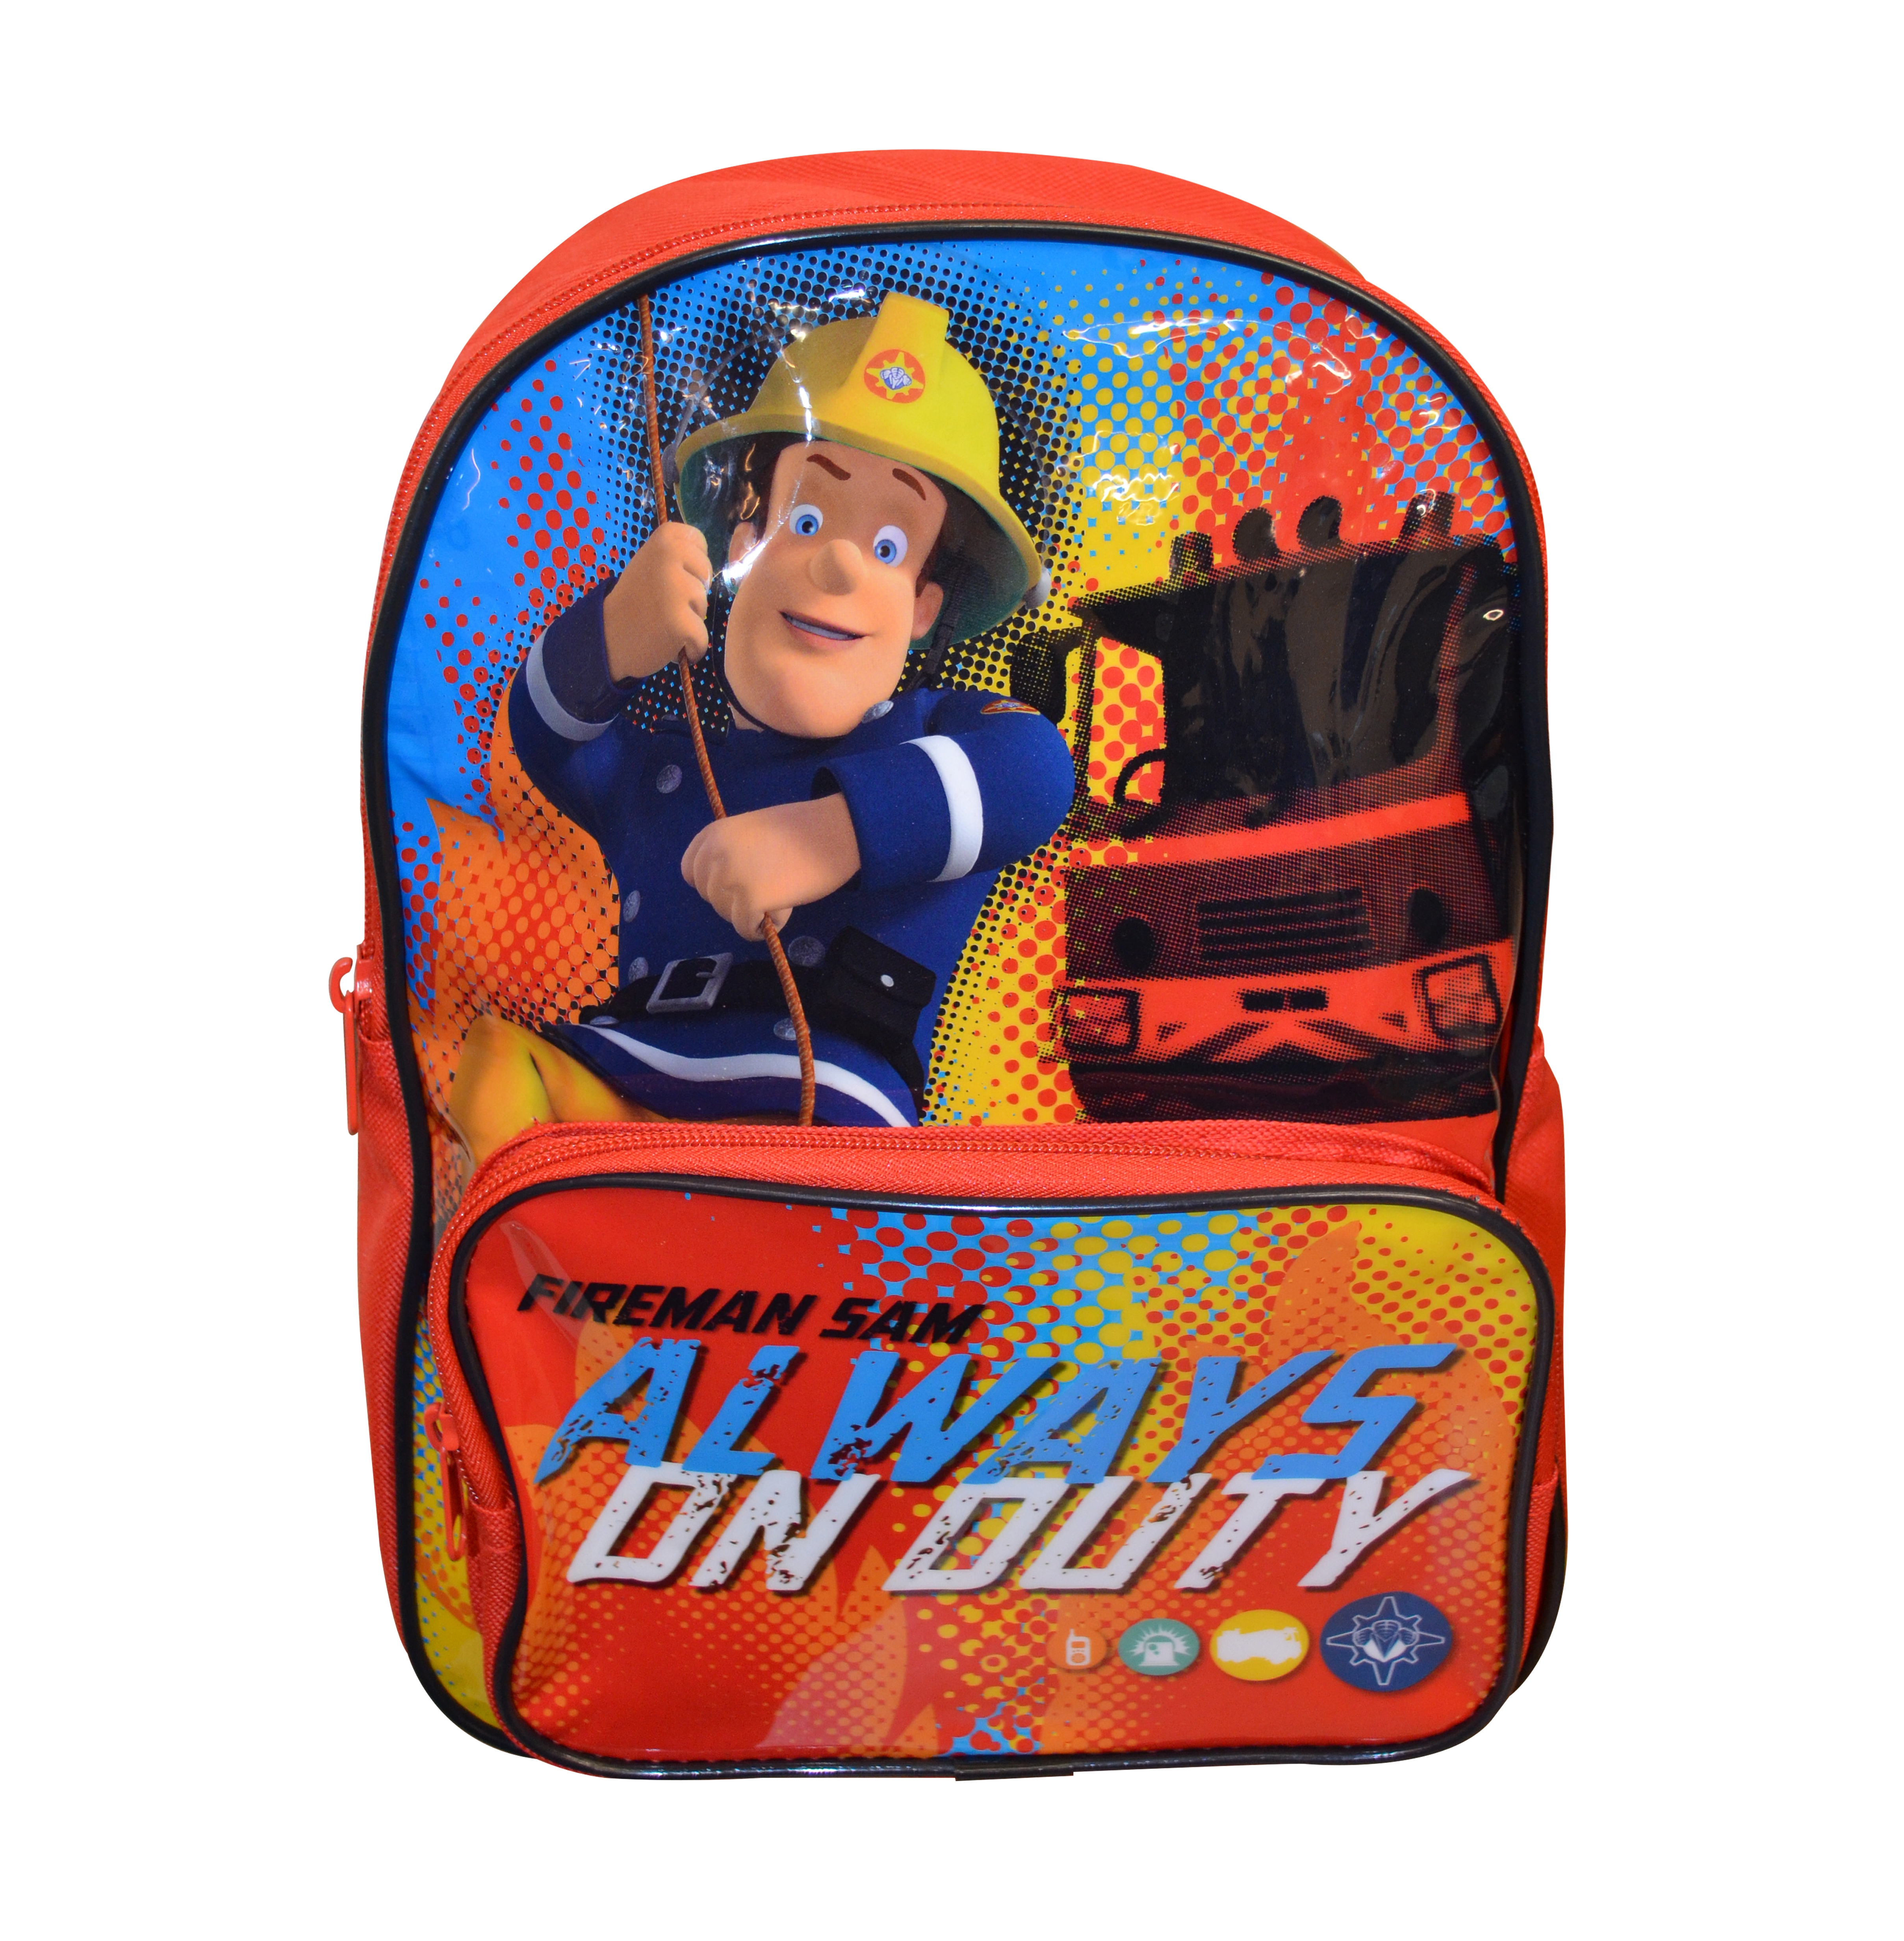 Fireman Sam School Bag Rucksack Backpack